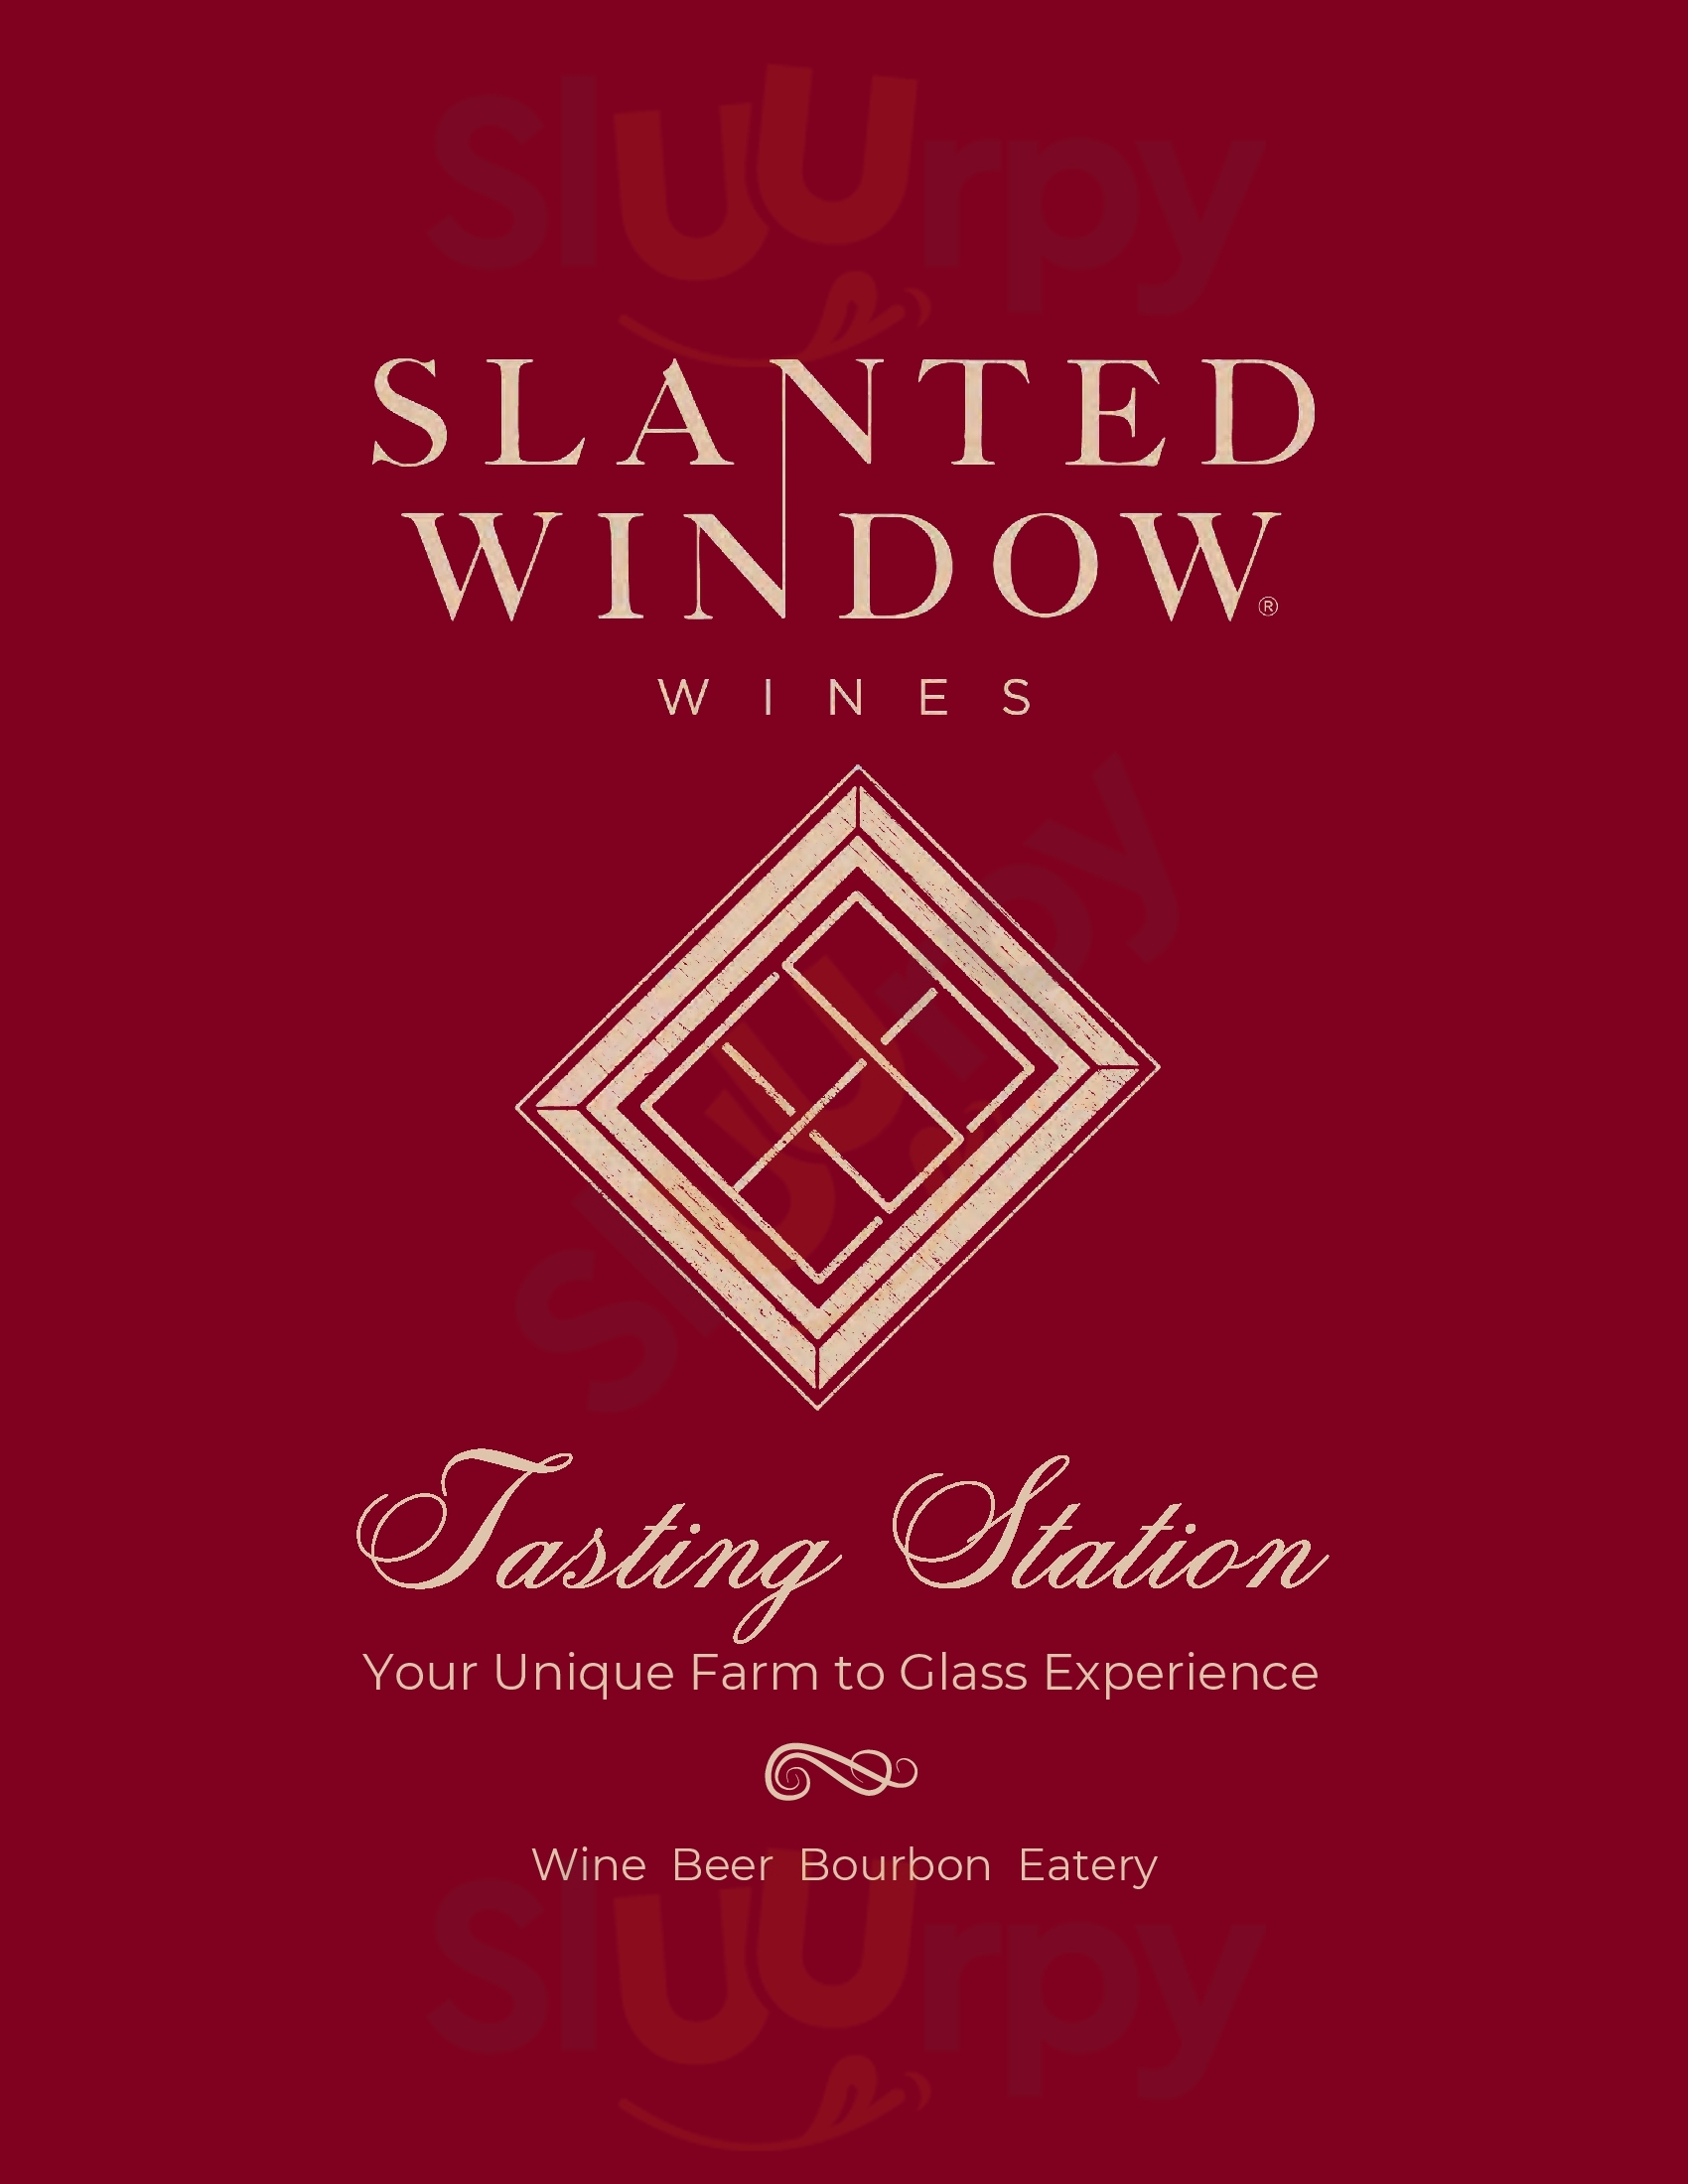 Slanted Window Tasting Station Franklin Menu - 1